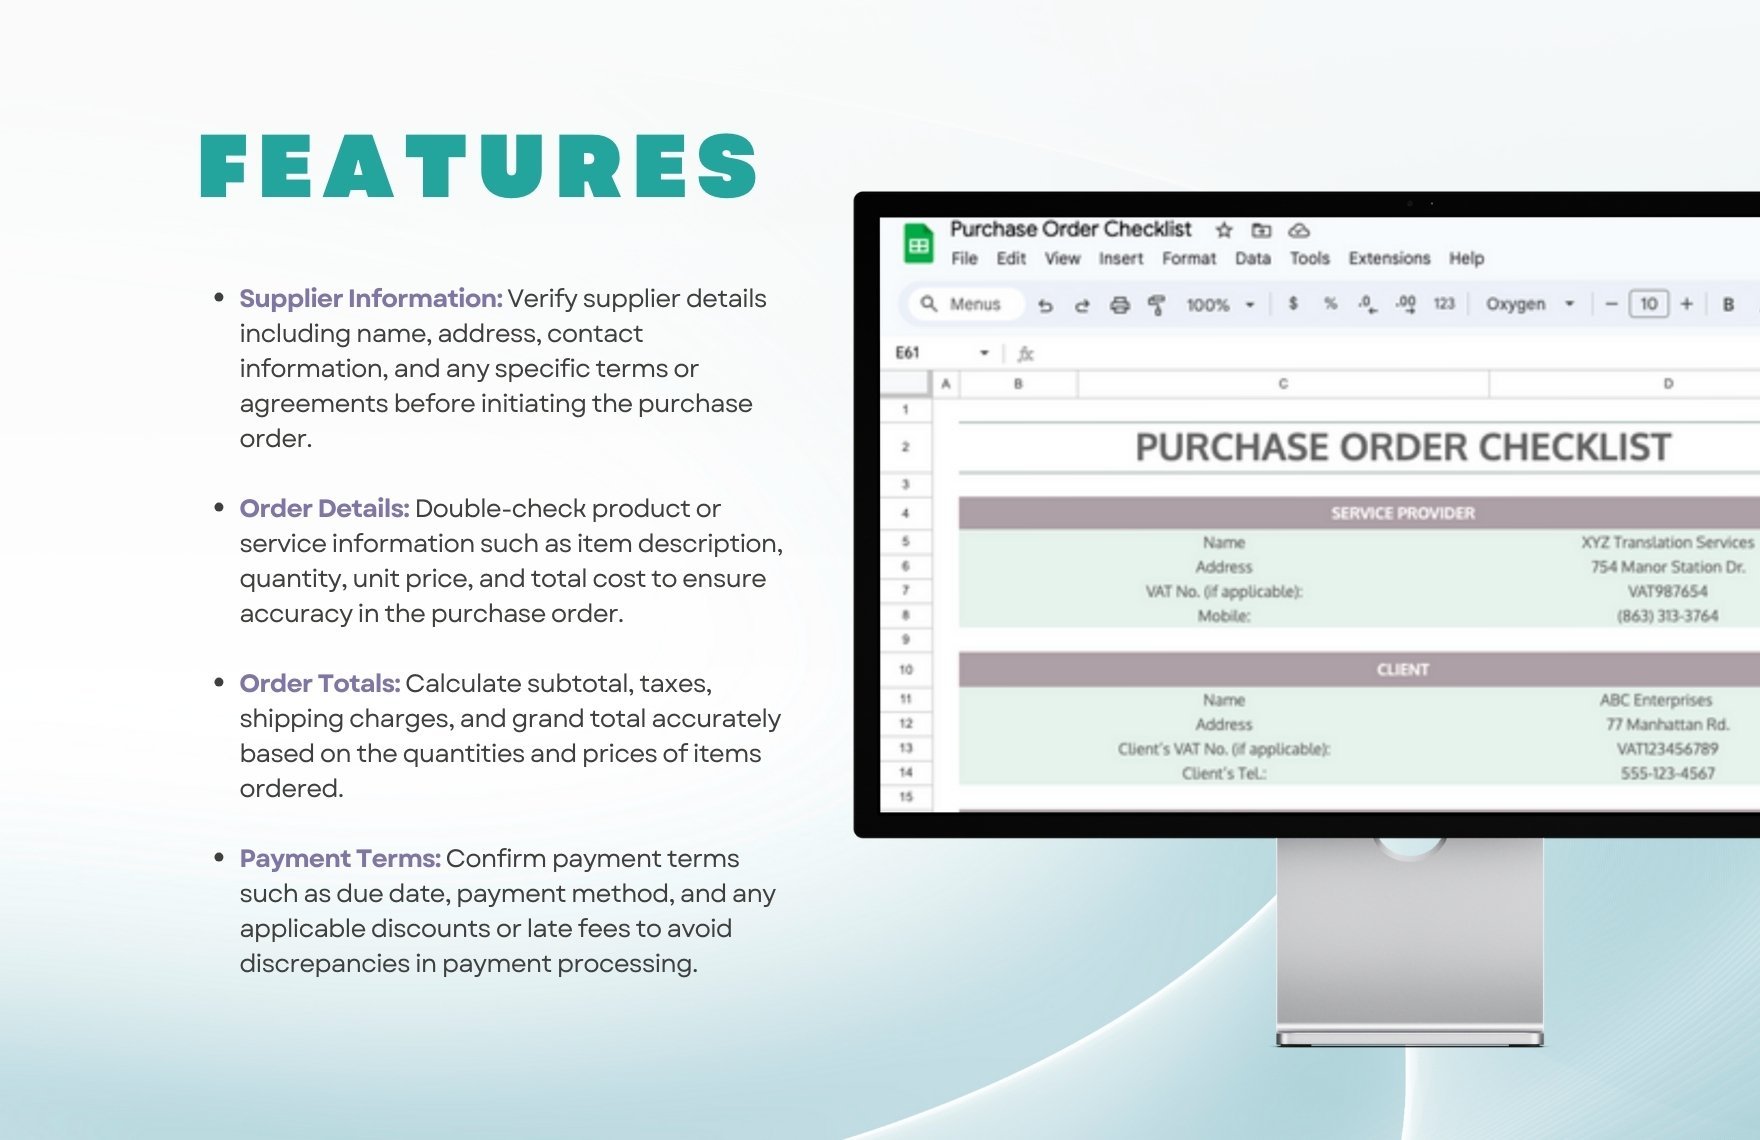 Purchase Order Checklist Template